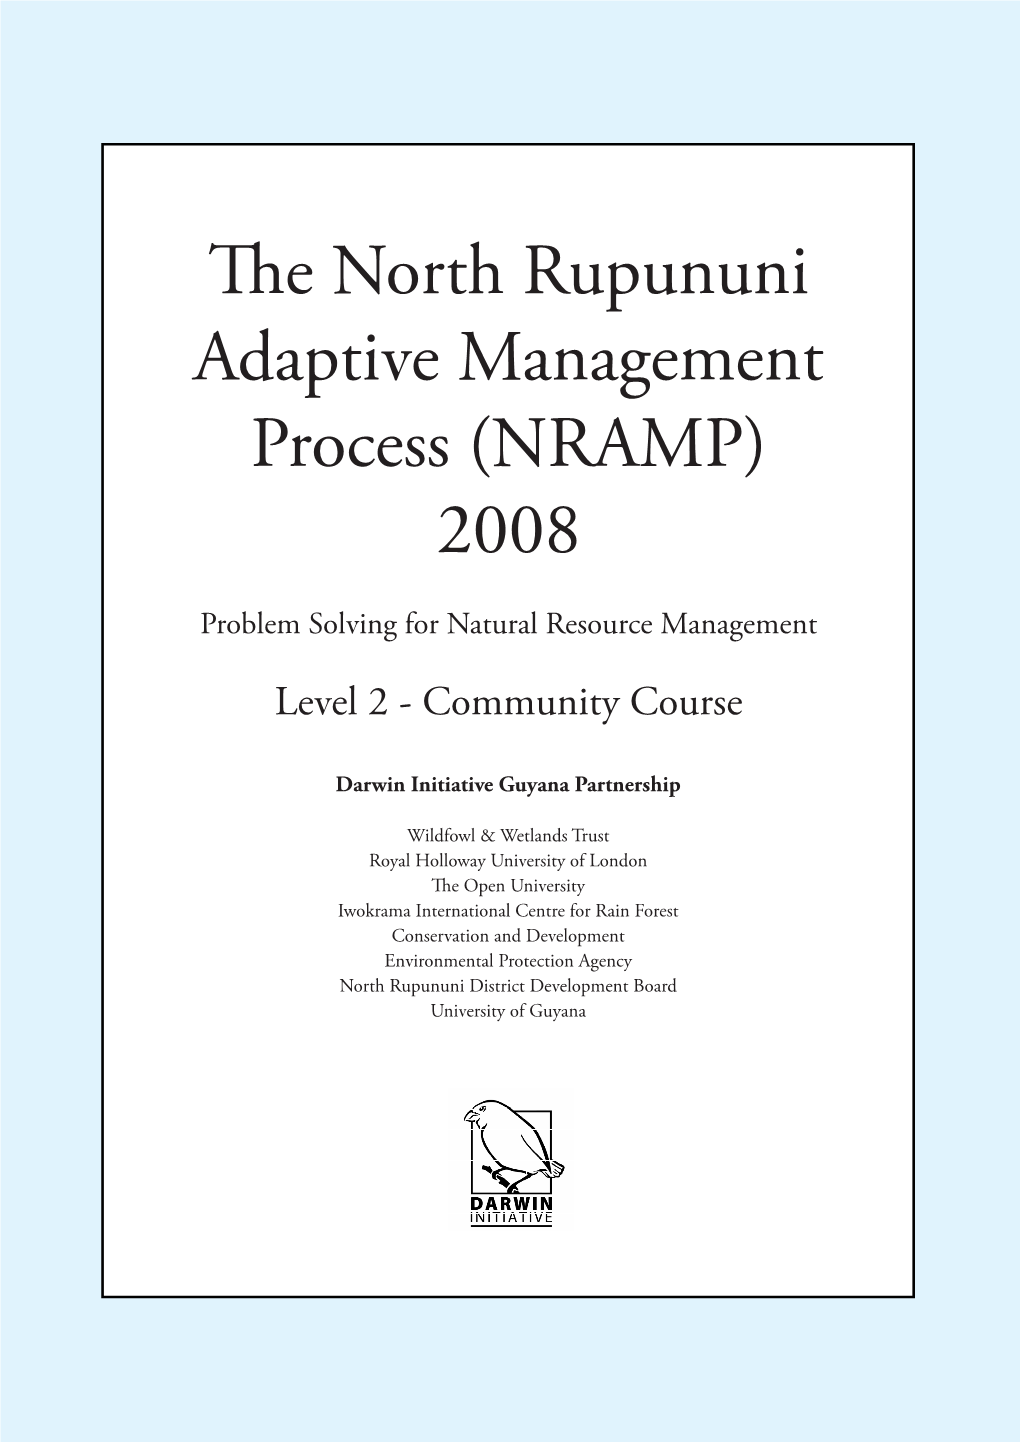 The North Rupununi Adaptive Management Process (NRAMP) 2008